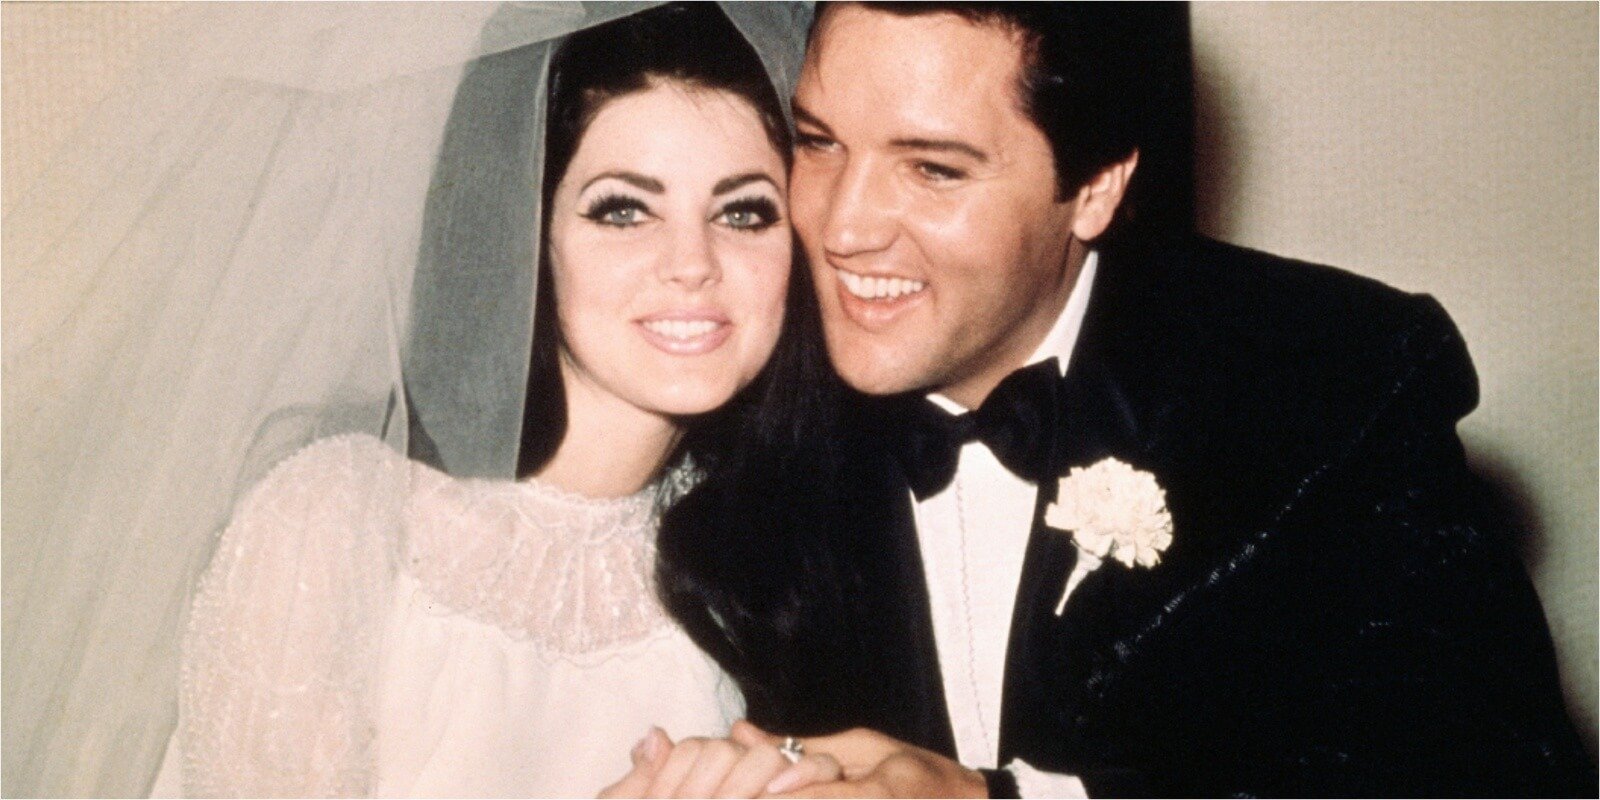 Priscilla Presley and Elvis Presley on their wedding day in 1967.